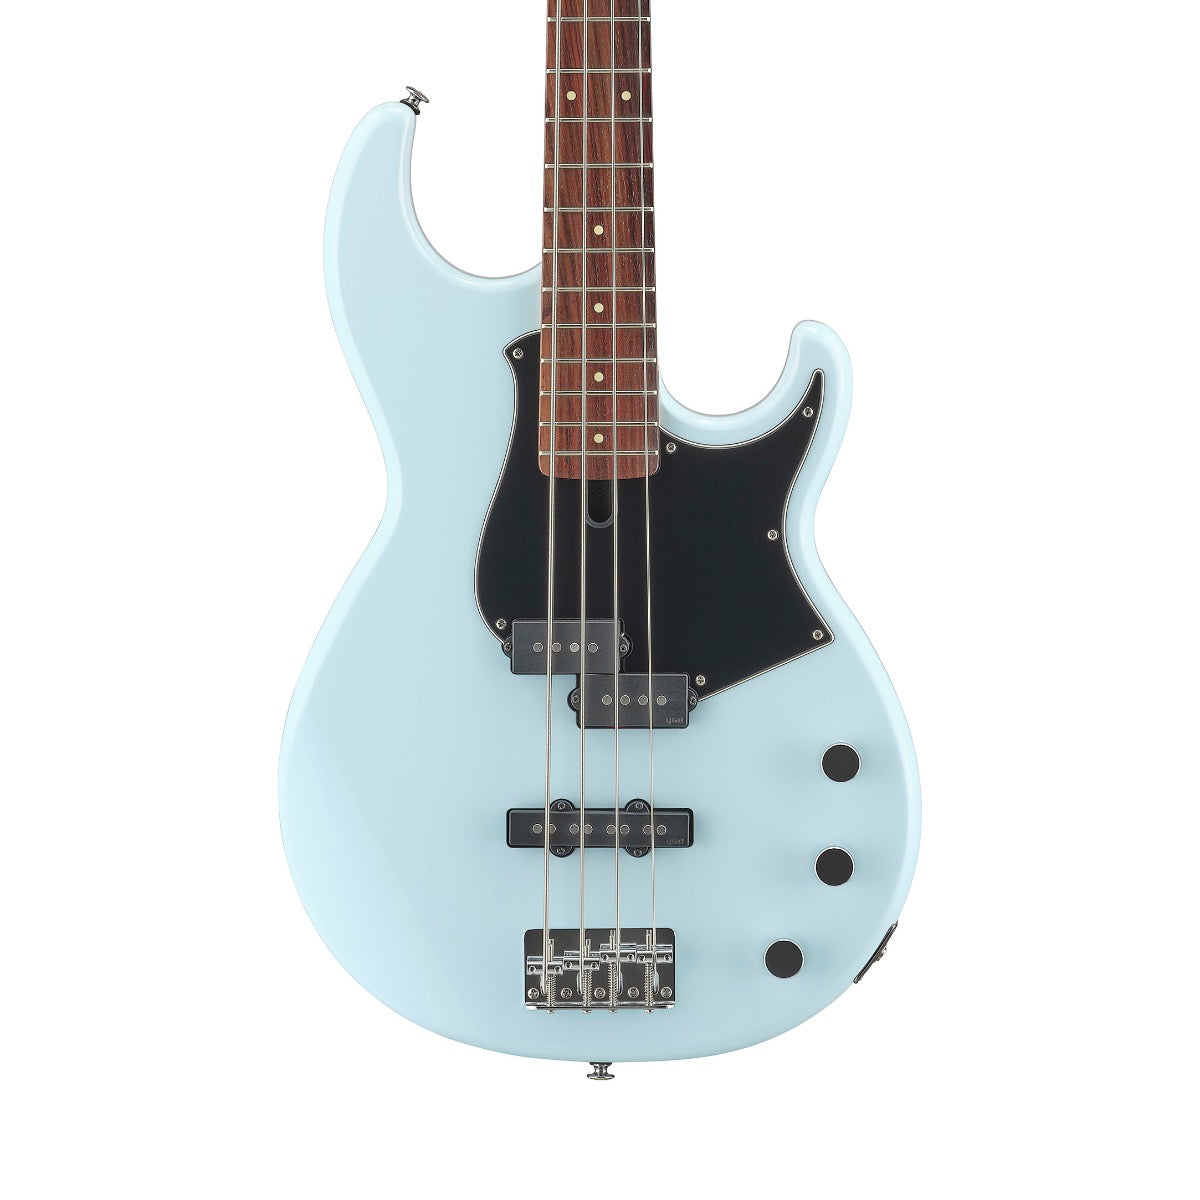 Yamaha BB434 Electric Bass Guitar - Ice Blue, View 1